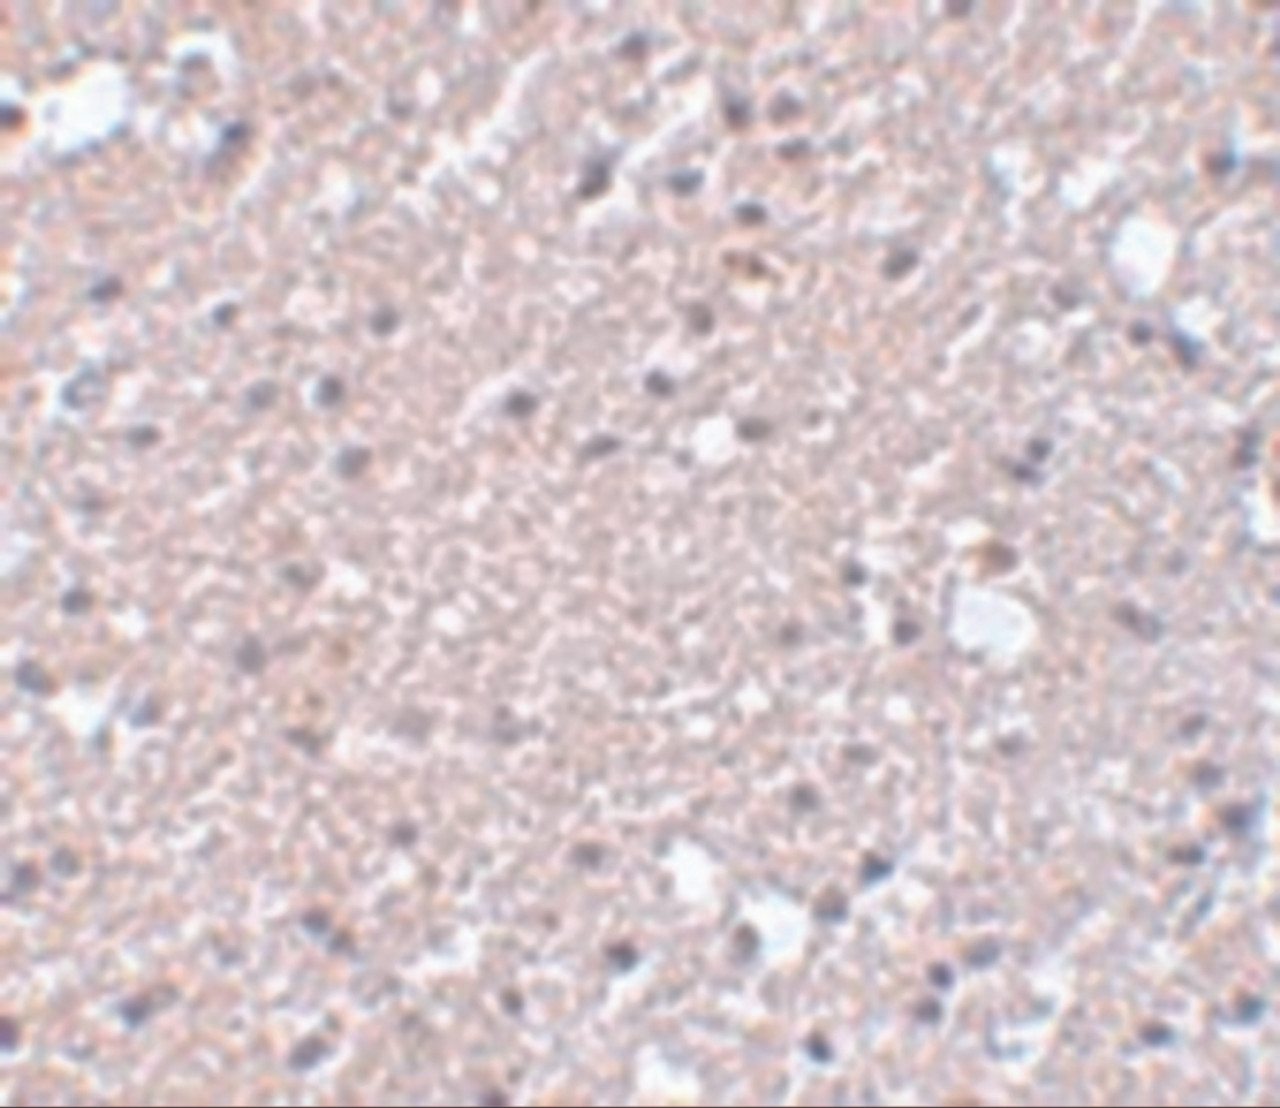 Immunohistochemistry of TMEM184A in human brain tissue with TMEM184A antibody at 5 ug/mL.